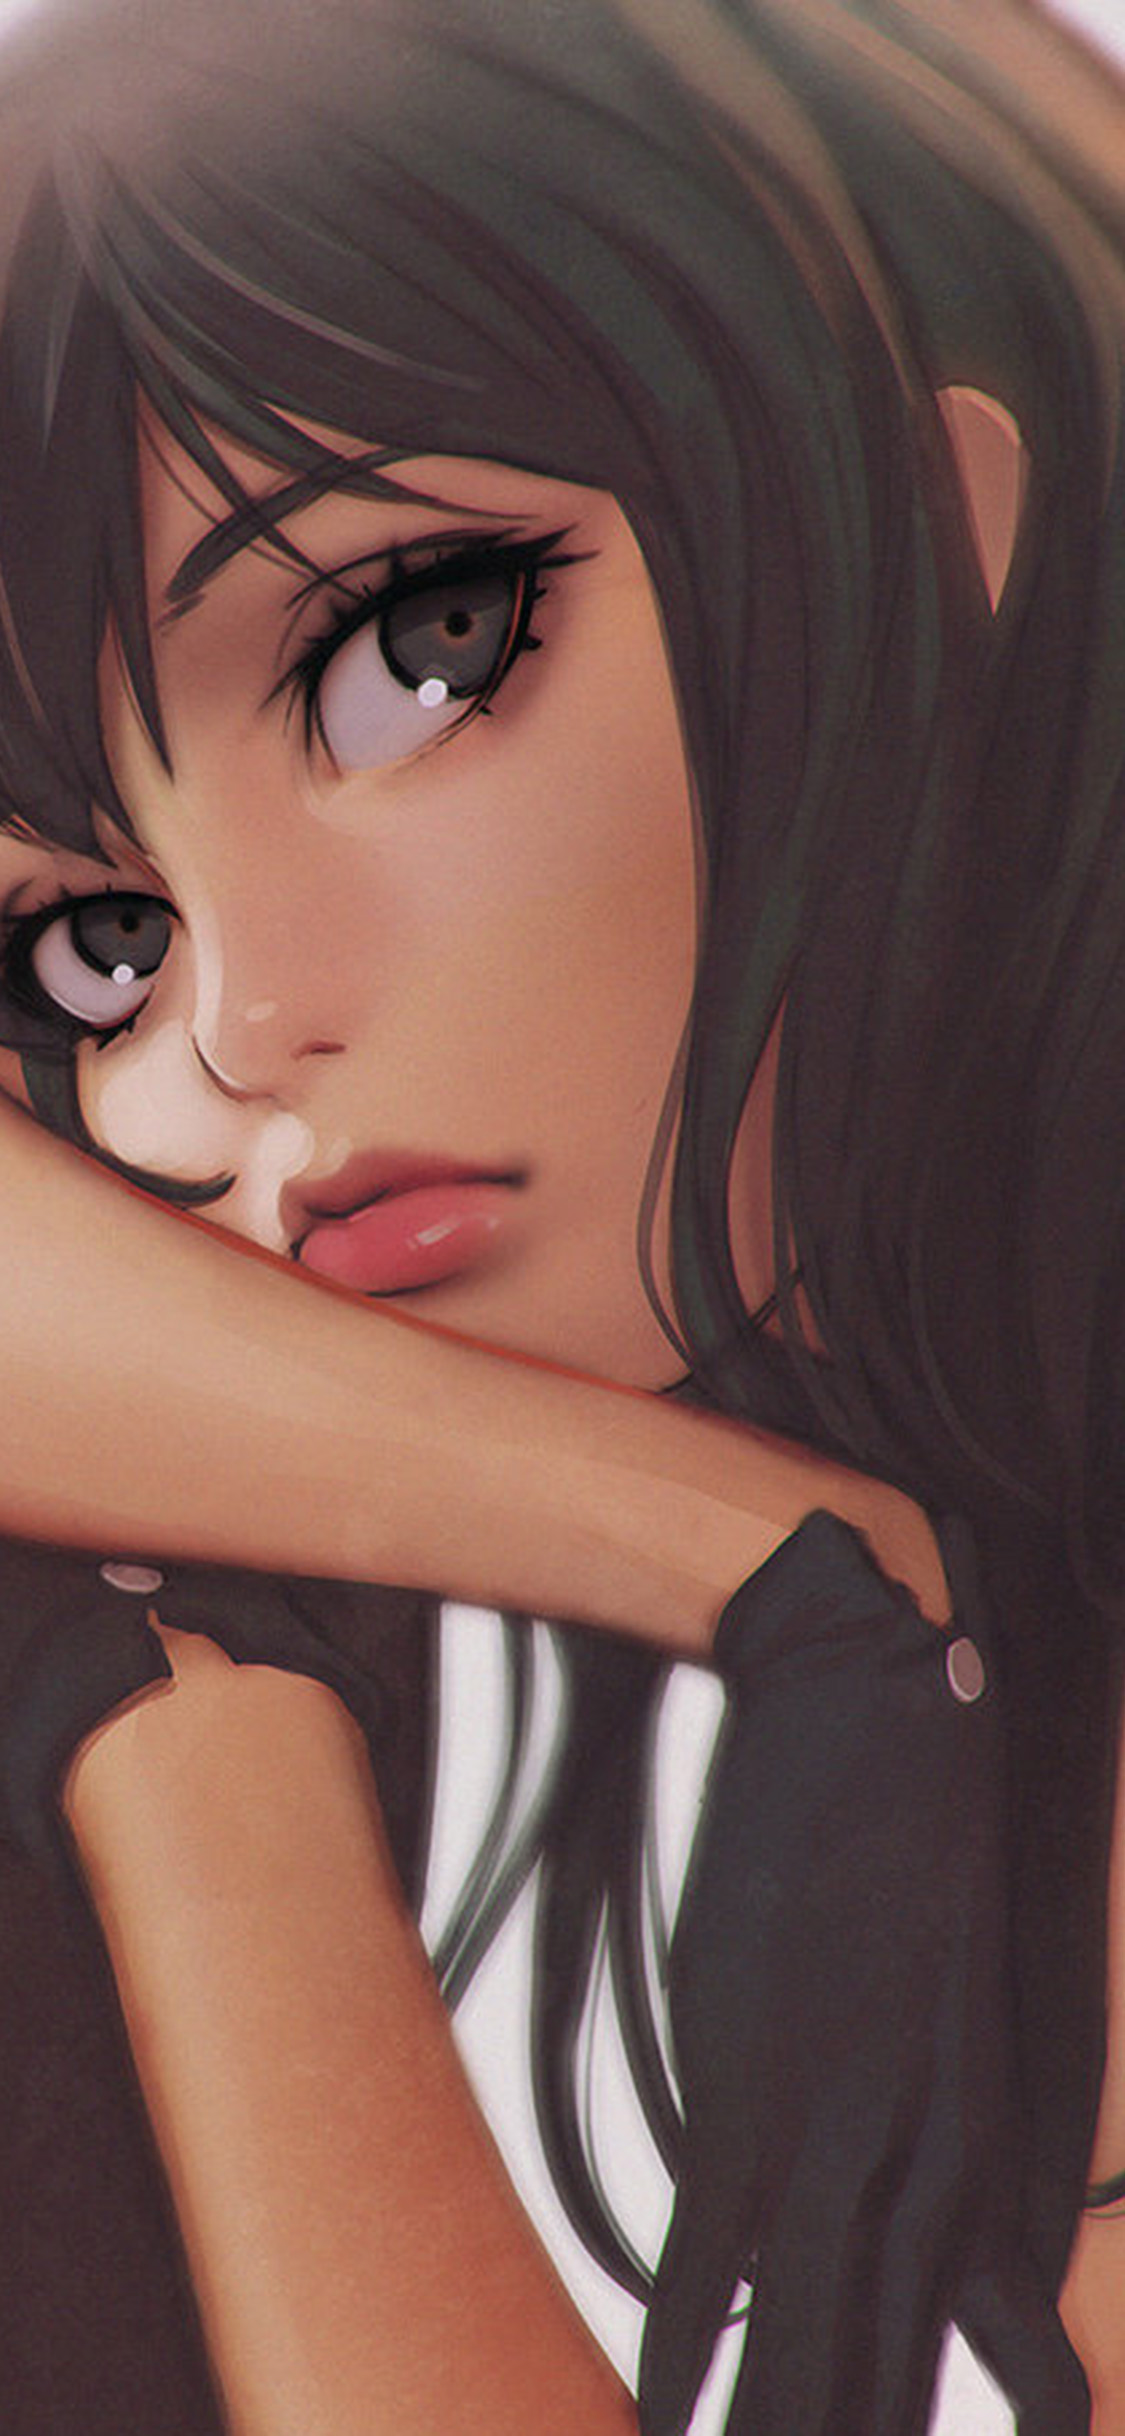 iPhone X wallpaper. ilya girl face anime art